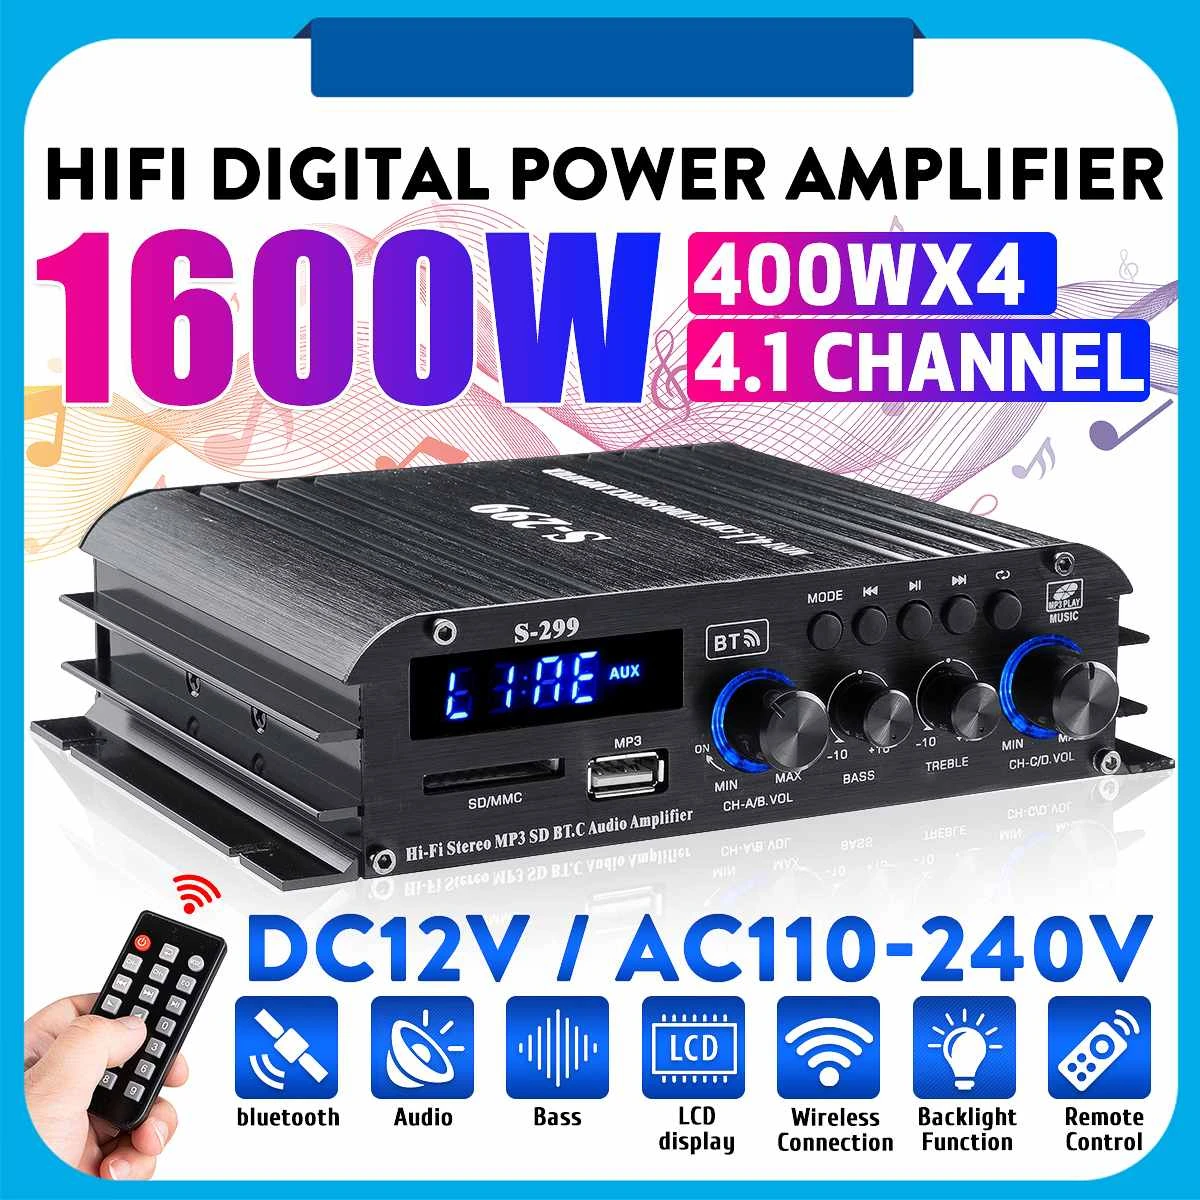 4*400W 4.1Channel Mini Hi-Fi Digital bluetooth Wireless Power Amplifier Car Home Audio Stereo Speakers Bass Amplifier USB/SD AUX bluetooth amplifier